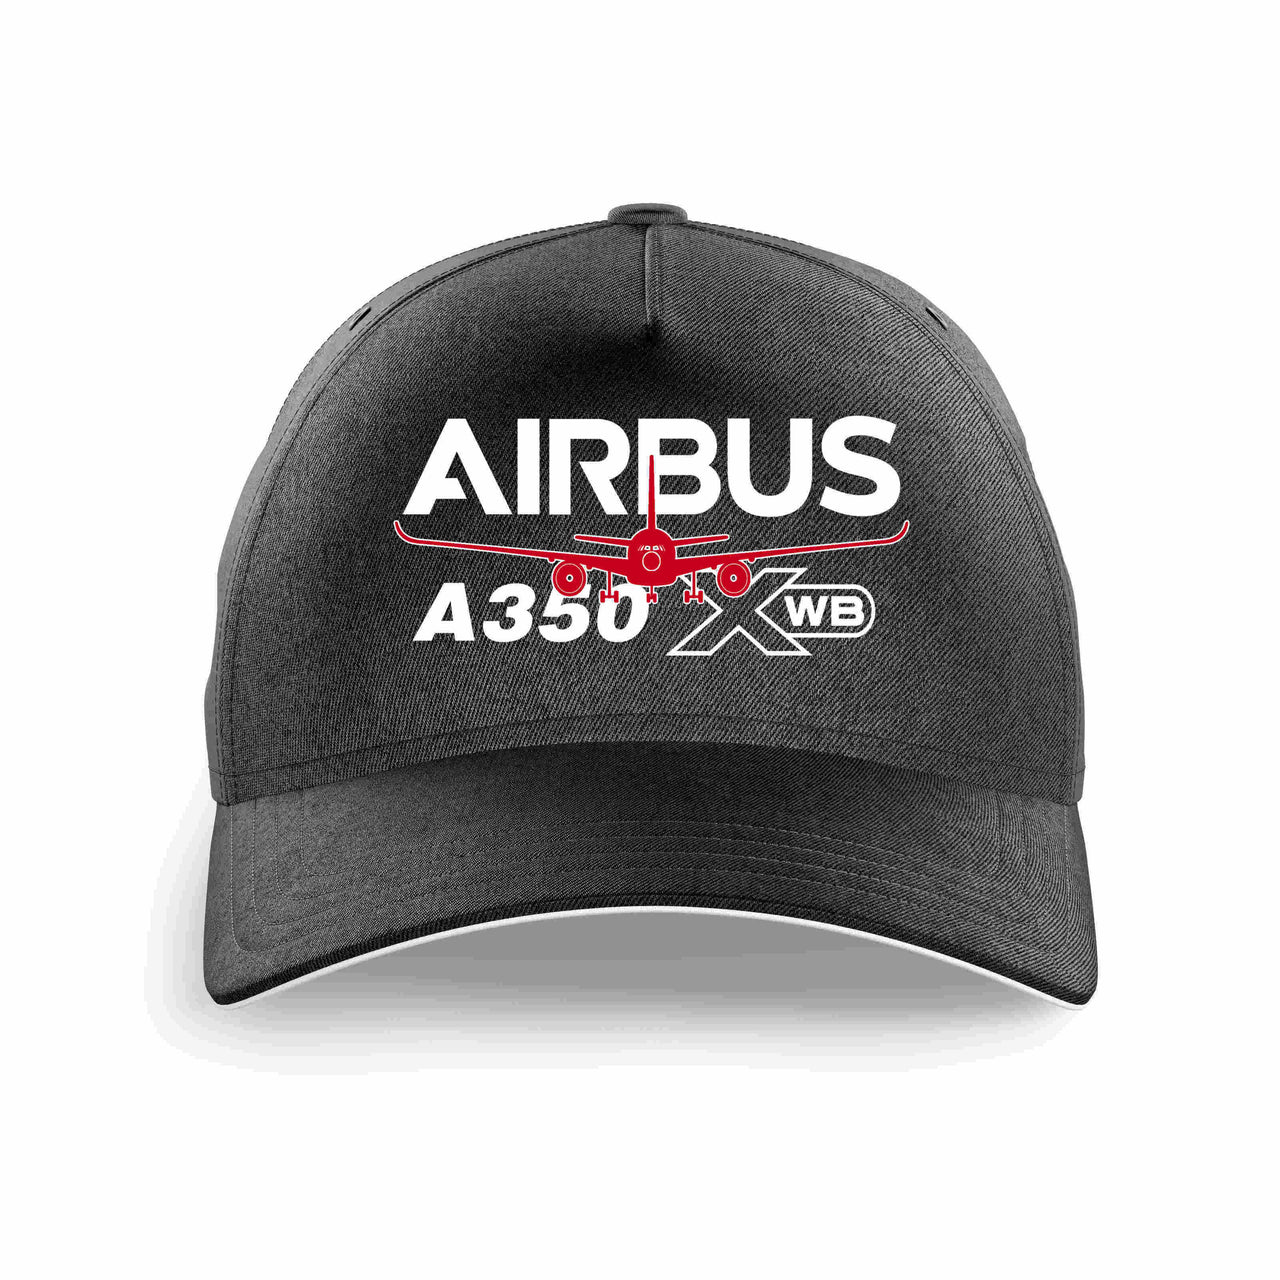 Amazing Airbus A350 XWB Printed Hats